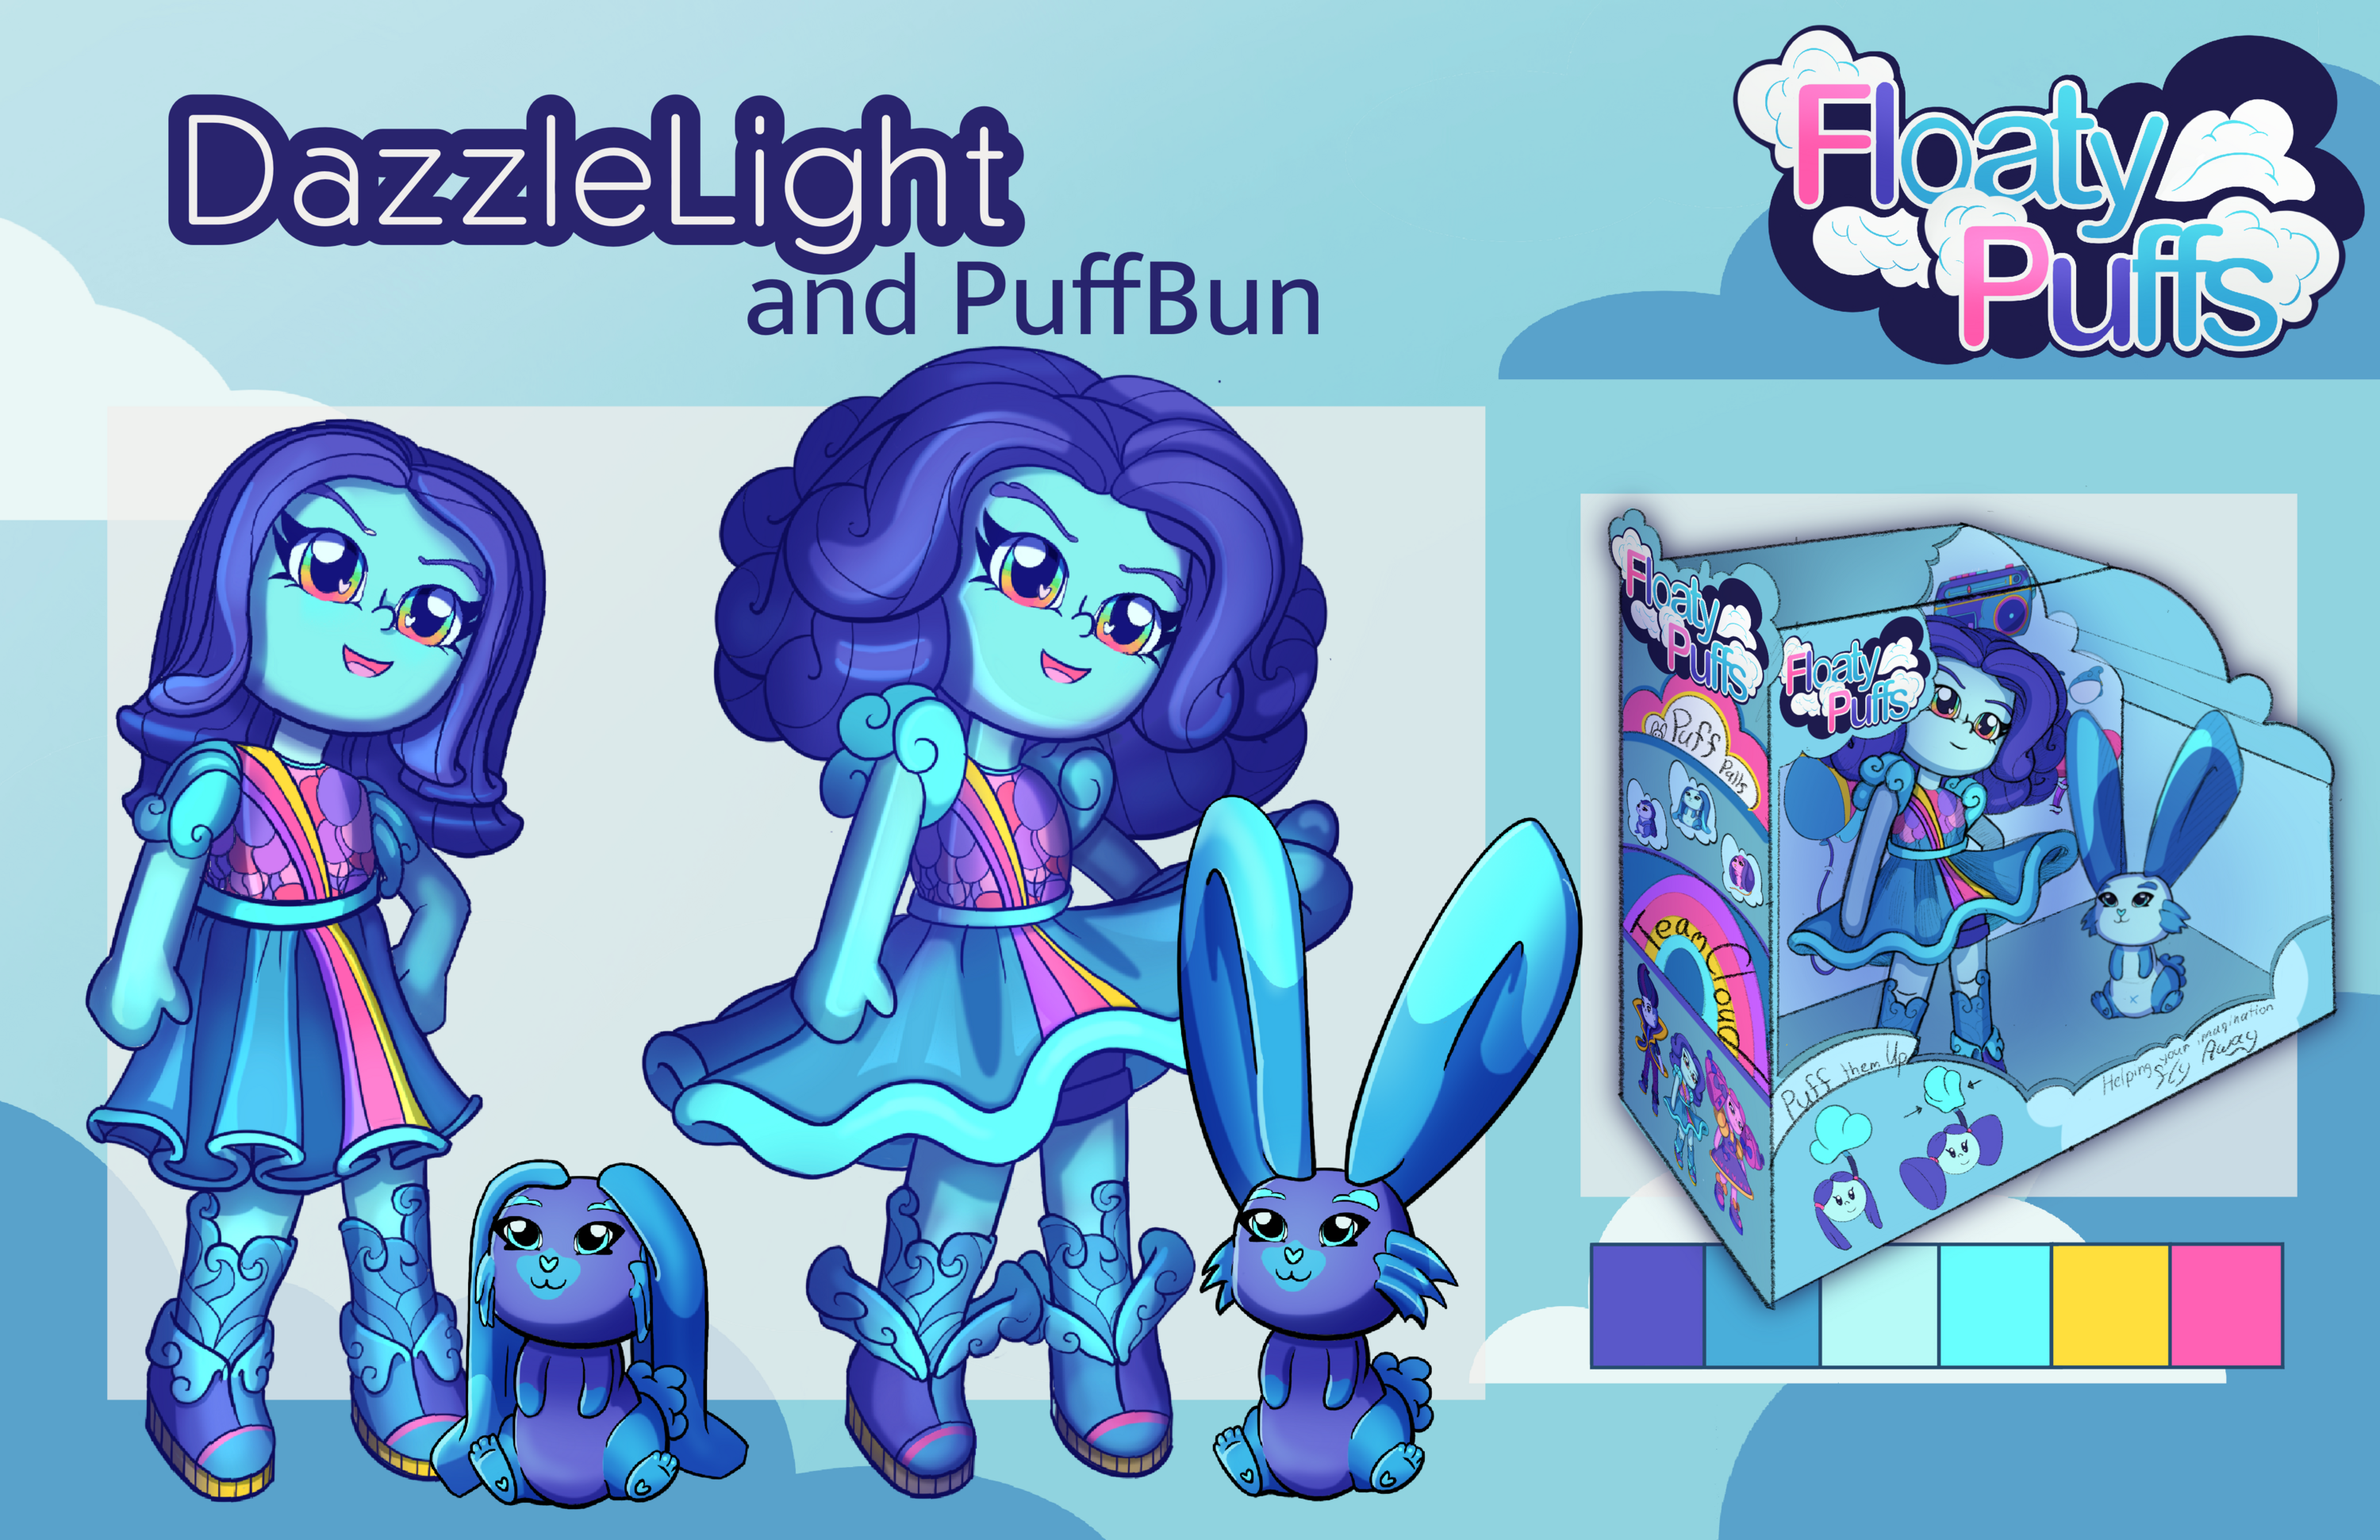 DazzleLight and PuffBun